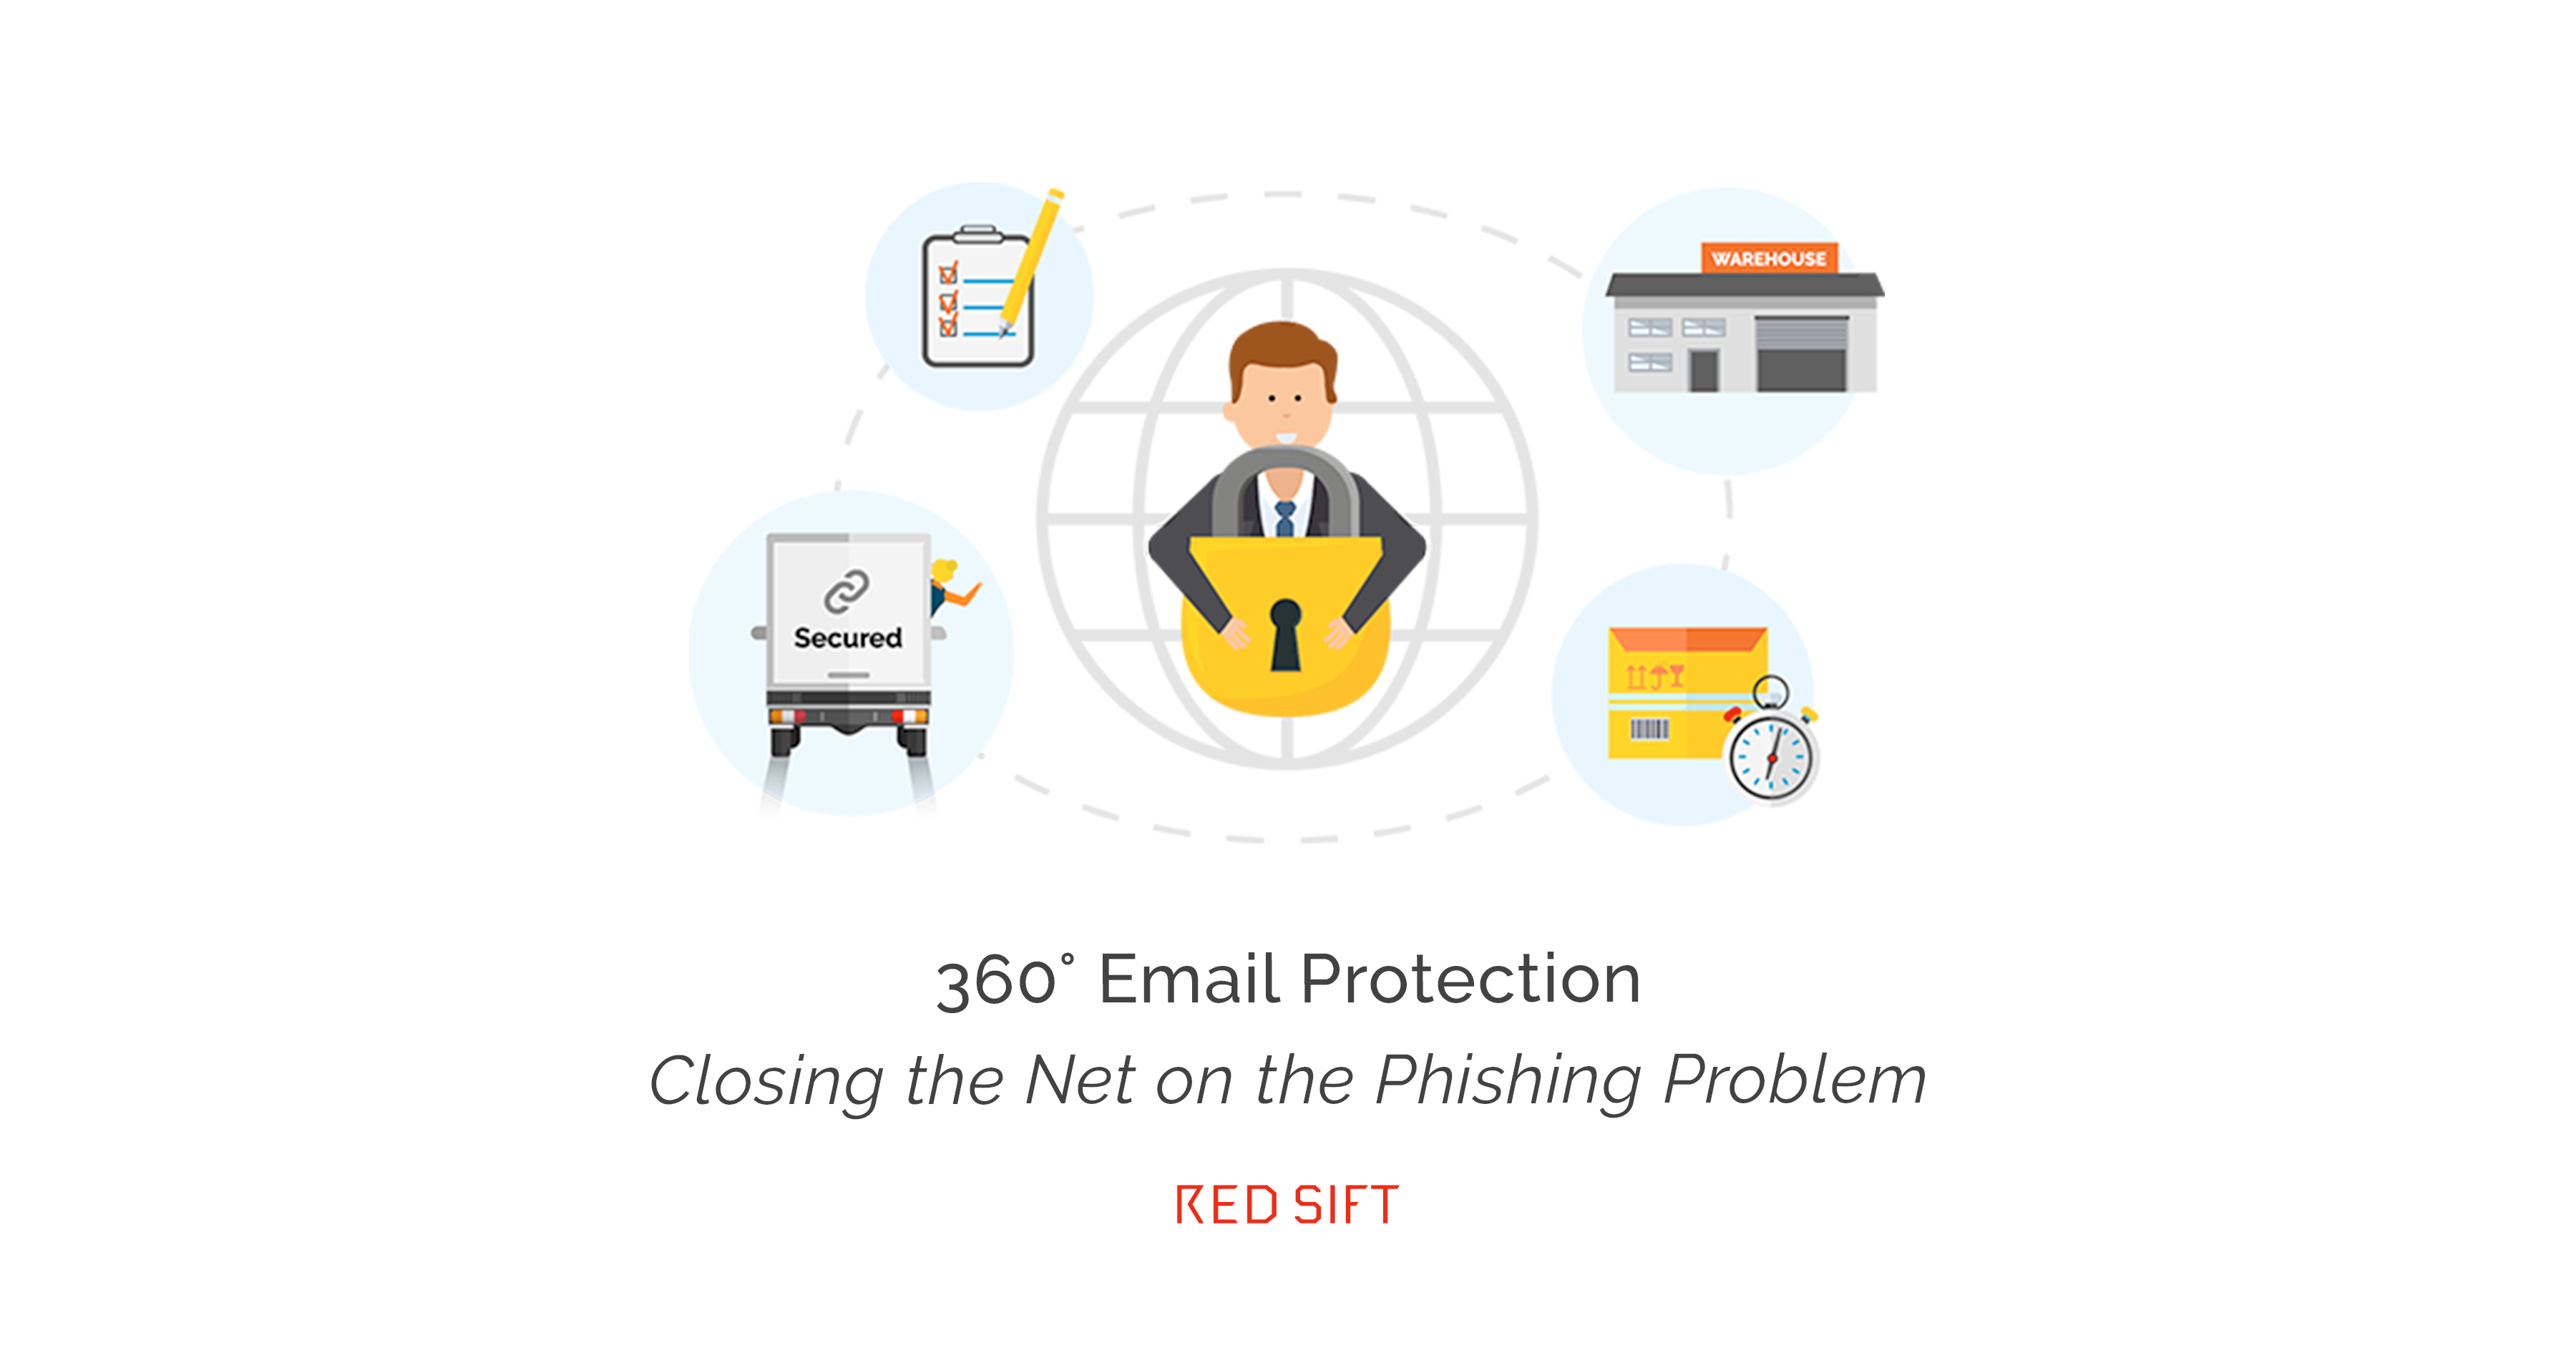 Closing the Net on the Phishing Problem